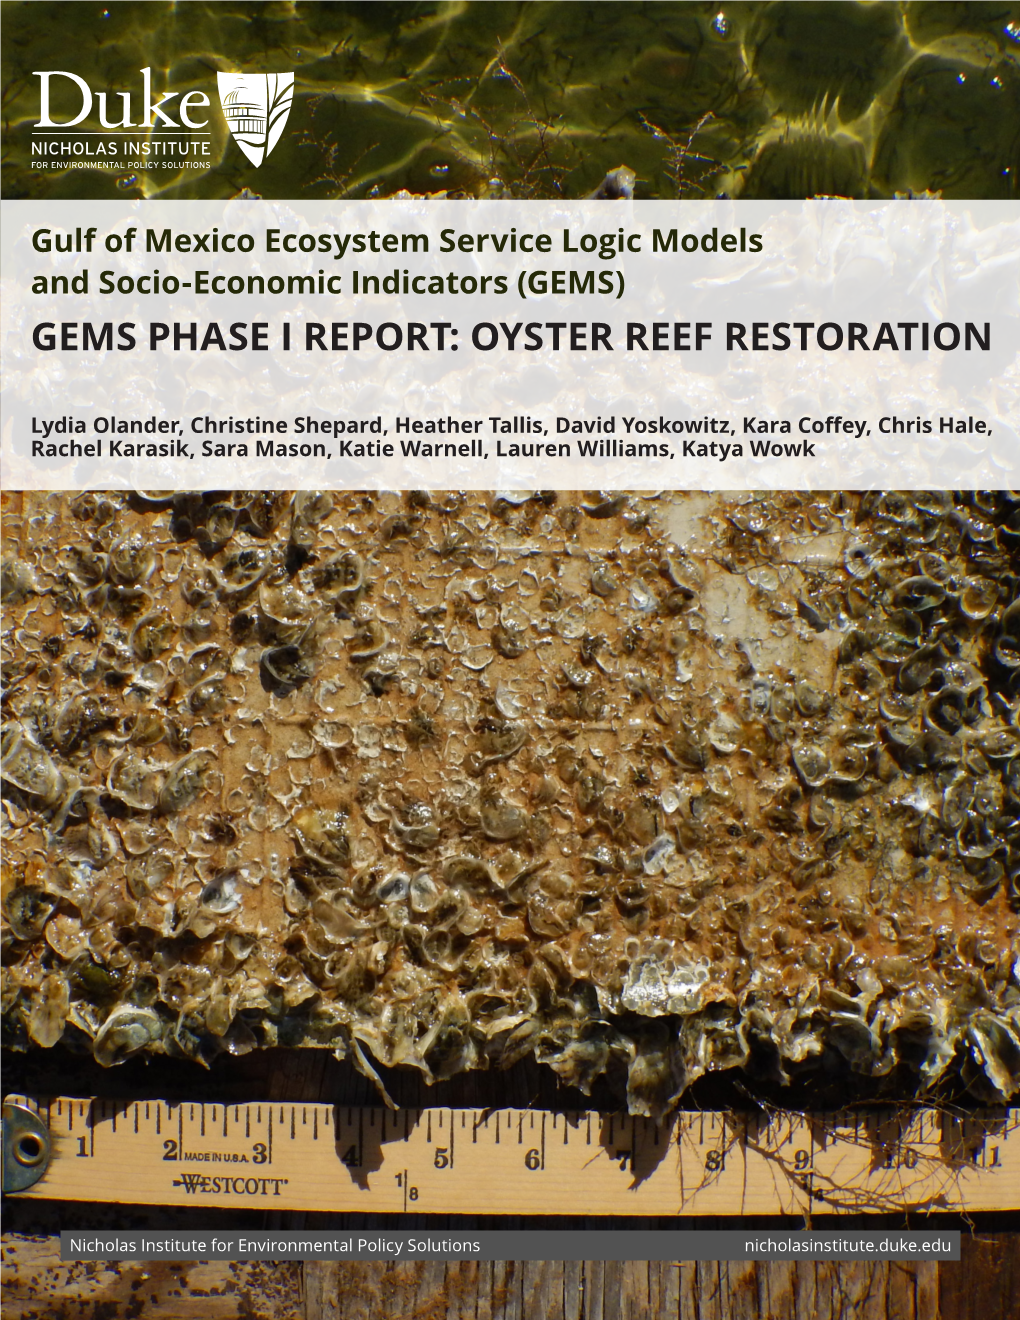 Oyster Reef Restoration